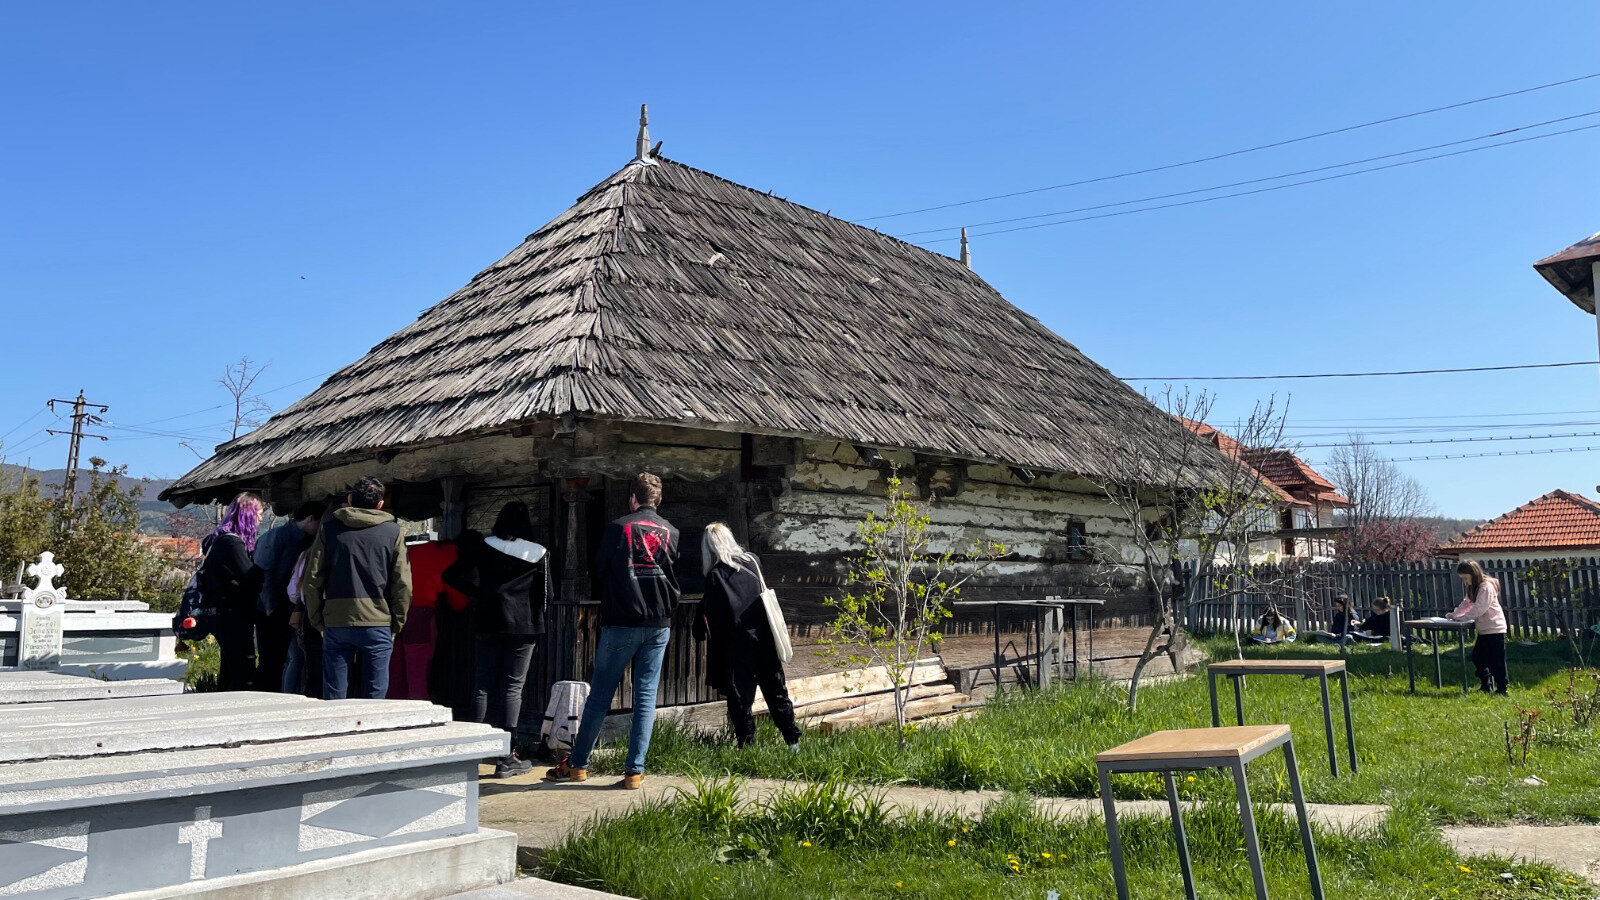 Inventory of the vernacular heritage of Mușetești, Gorj county